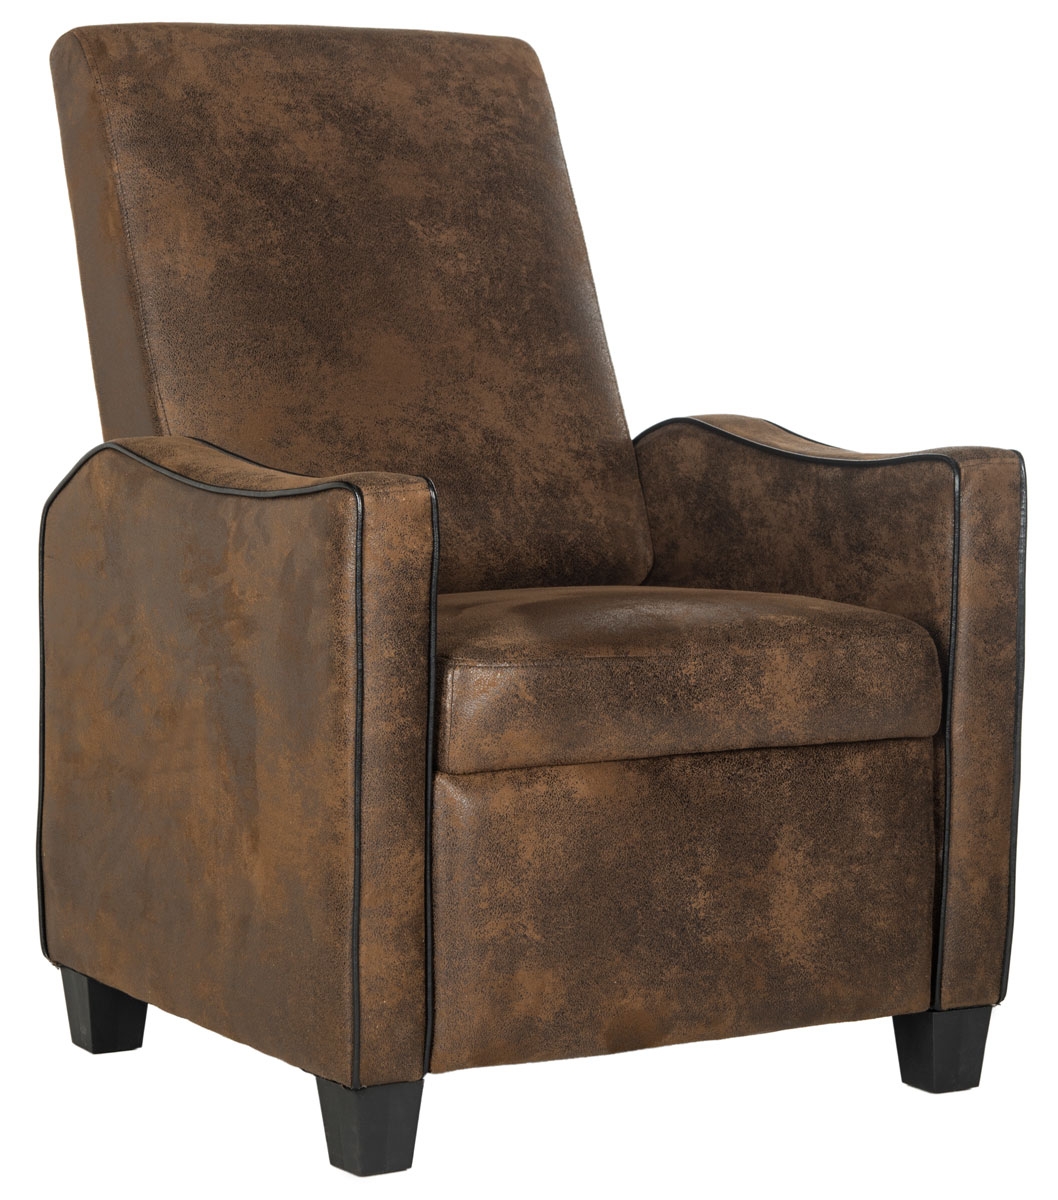 Holden Vintage Recliner Chair - Vintage Brown/Black - Arlo Home - Image 0